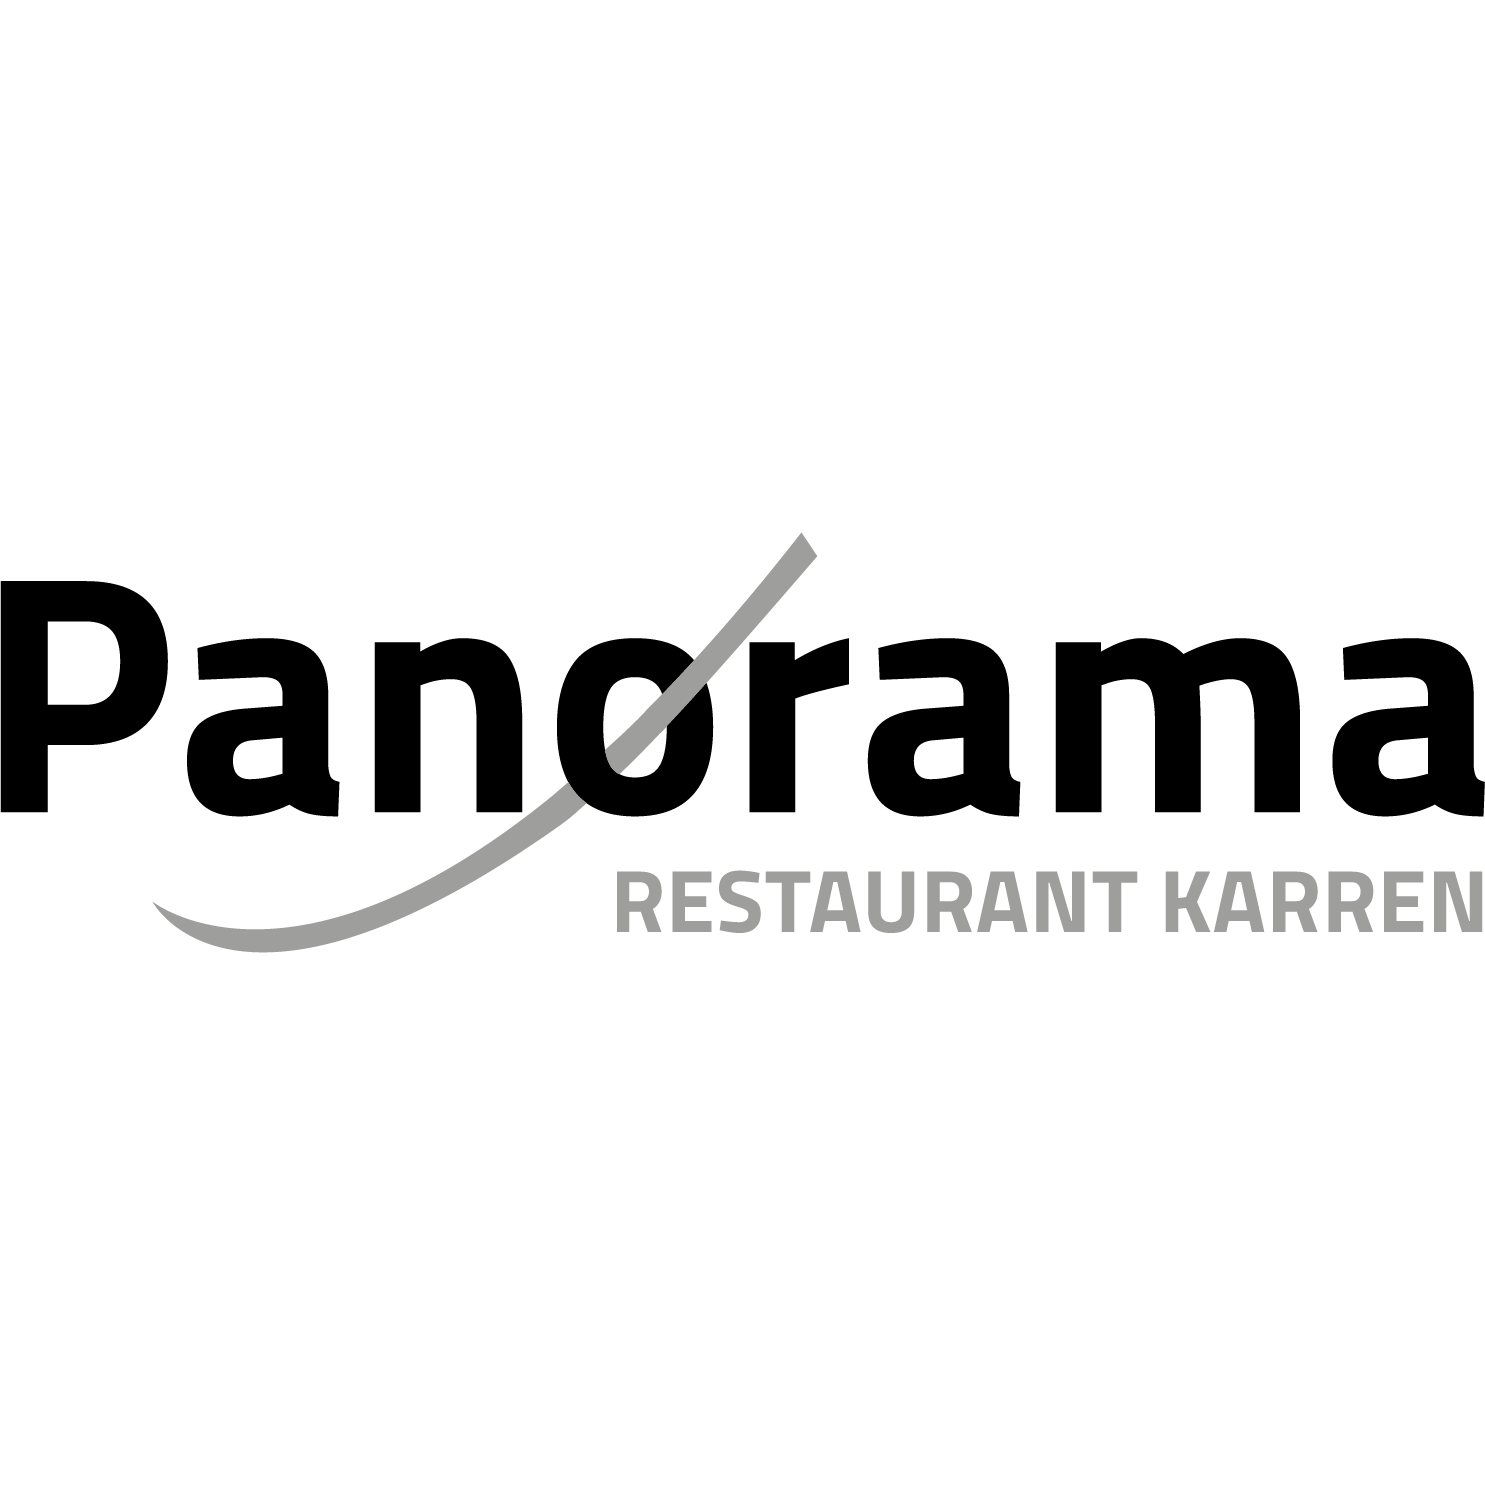 Panoramarestaurant Karren - Family Restaurant - Dornbirn - 05572 54711 Austria | ShowMeLocal.com